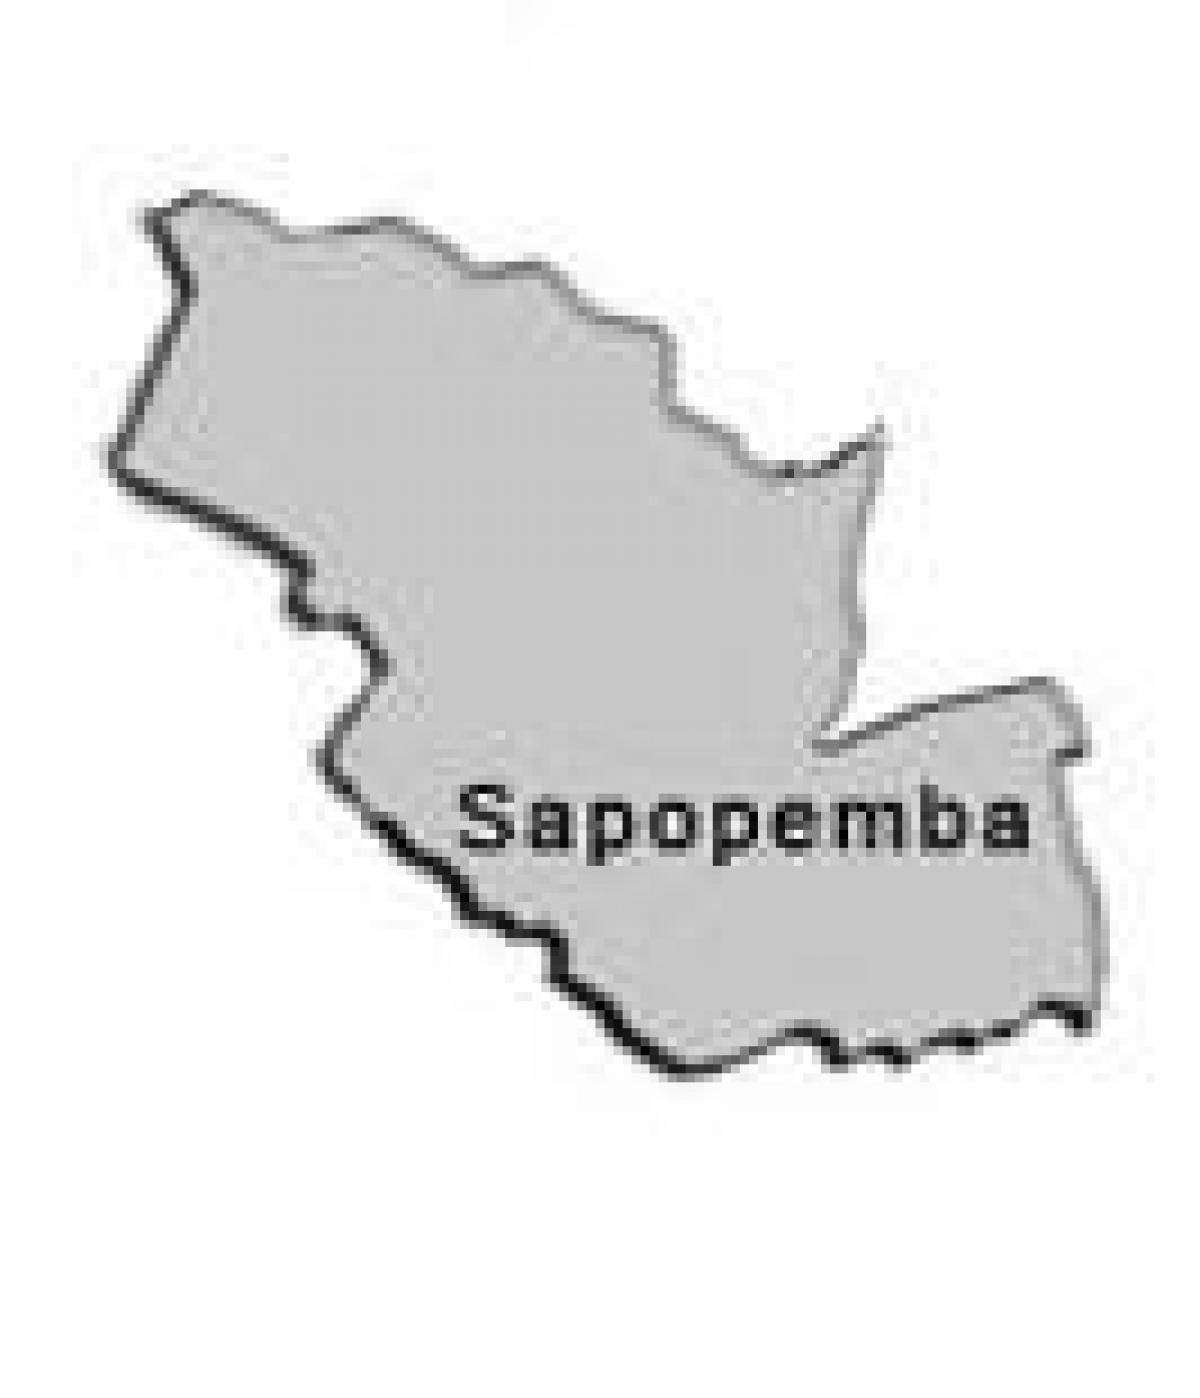 Peta dari Sapopembra sub-prefektur